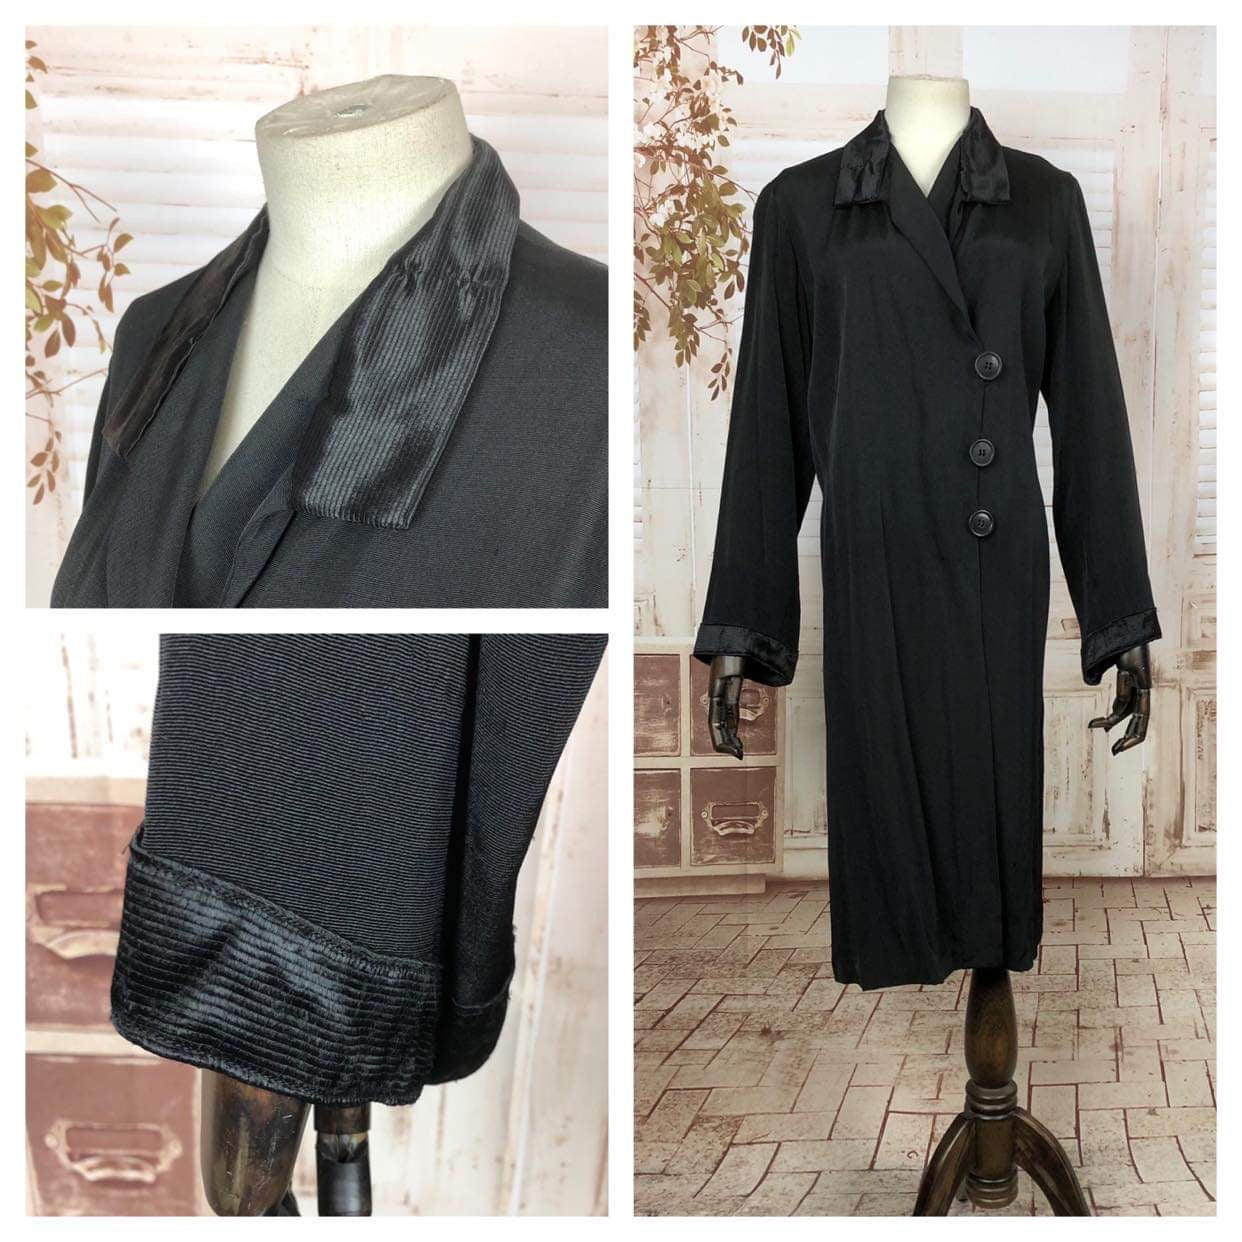 Original Late 1920s 20s Early 1930s 30s Vintage Black Asymmetric Faille Coat